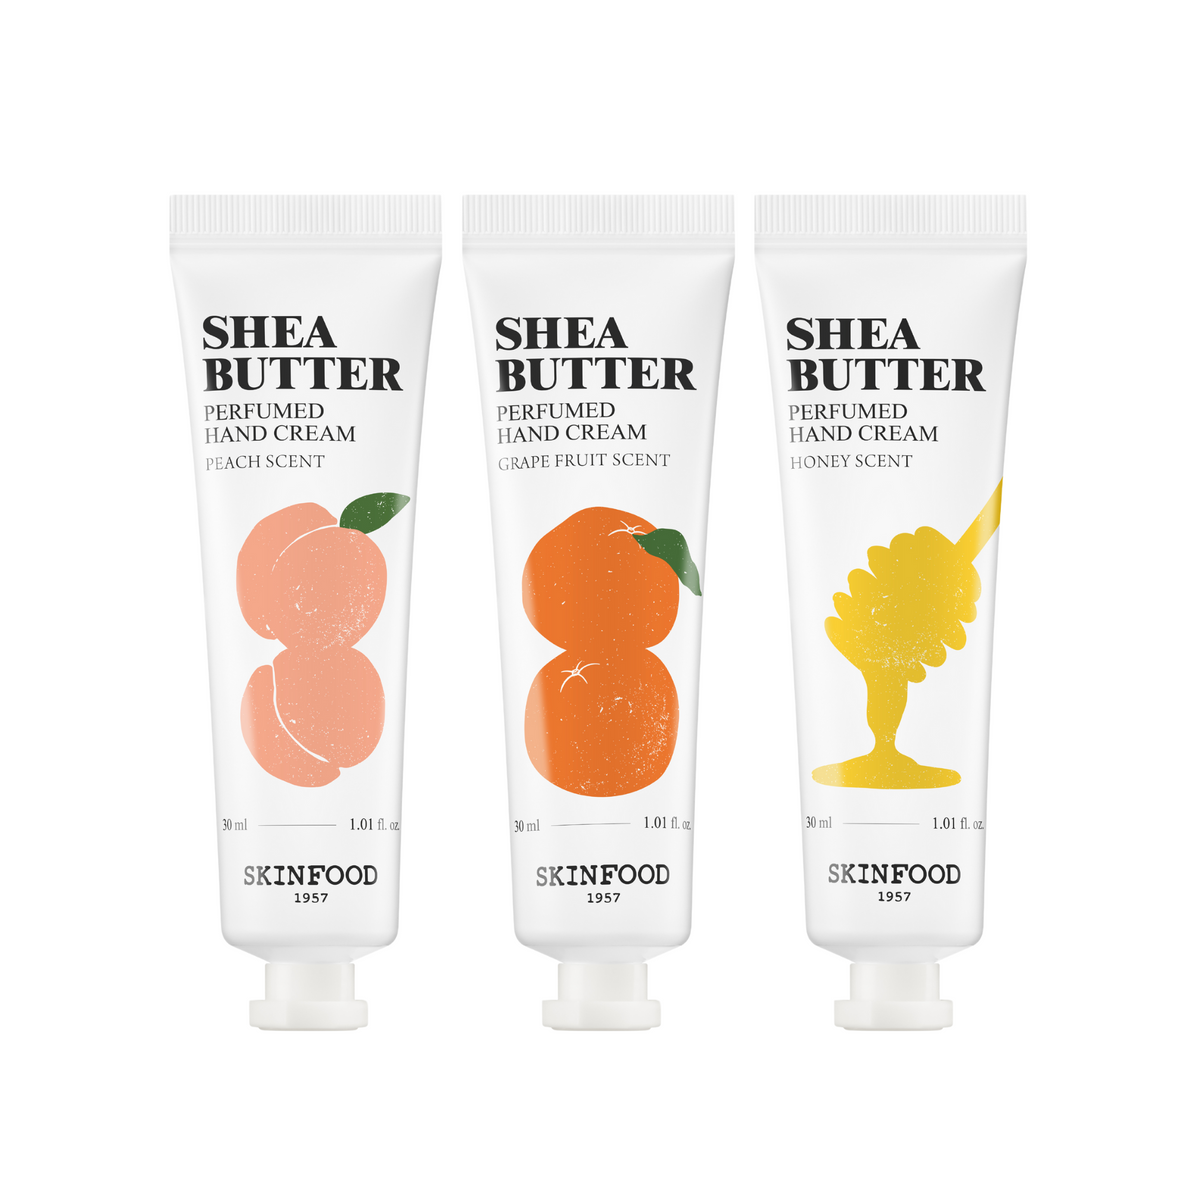 SKINFOOD Sheabutter Perfumed Hand Cream (30ml) - 3 Types